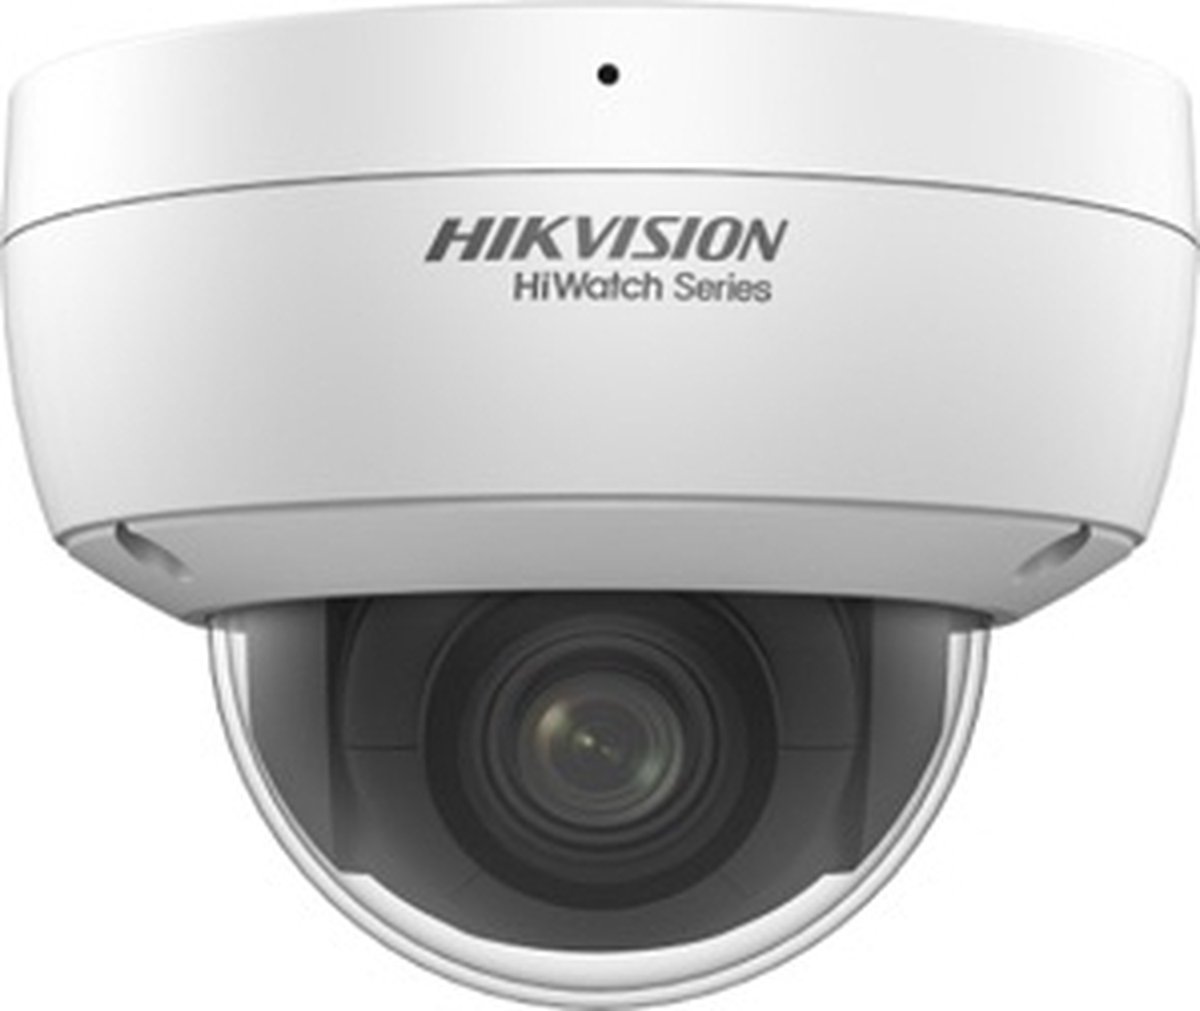 Hikvision HWI-D720H-V HiWatch Full HD 2MP buiten dome met IR nachtzicht, varifocale lens, microSD, microfoon en PoE - Beveiligingscamera IP camera bewakingscamera camerabewaking veiligheidscamera beveiliging netwerk camera webcam